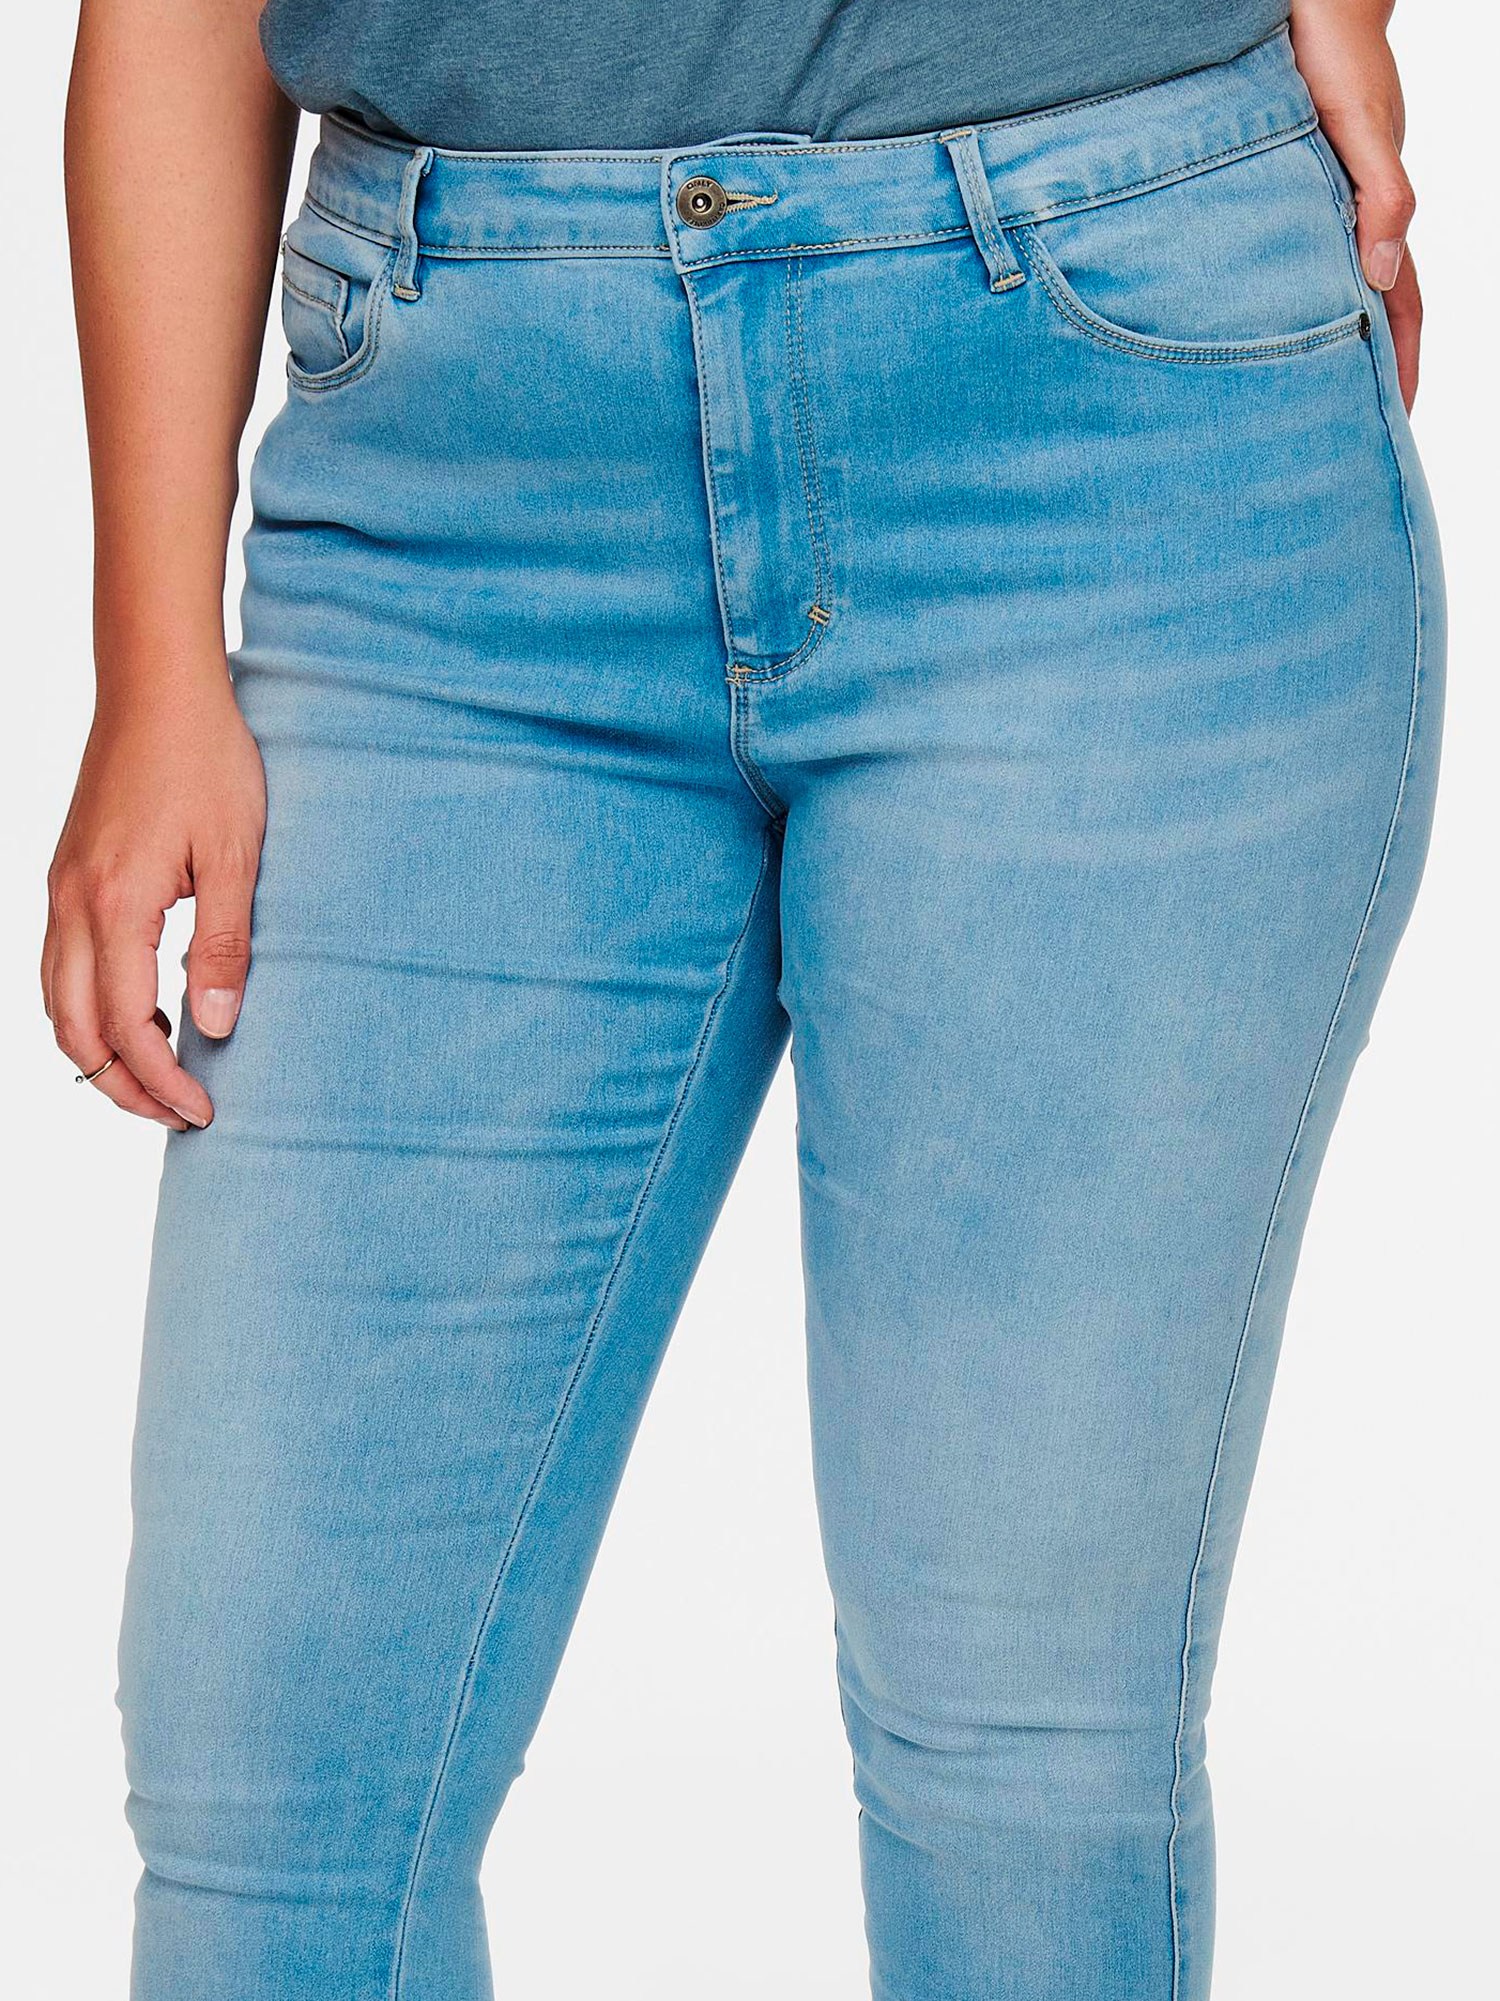 AUGUSTA - Lyseblå jeans med benlengde 32 fra Only Carmakoma